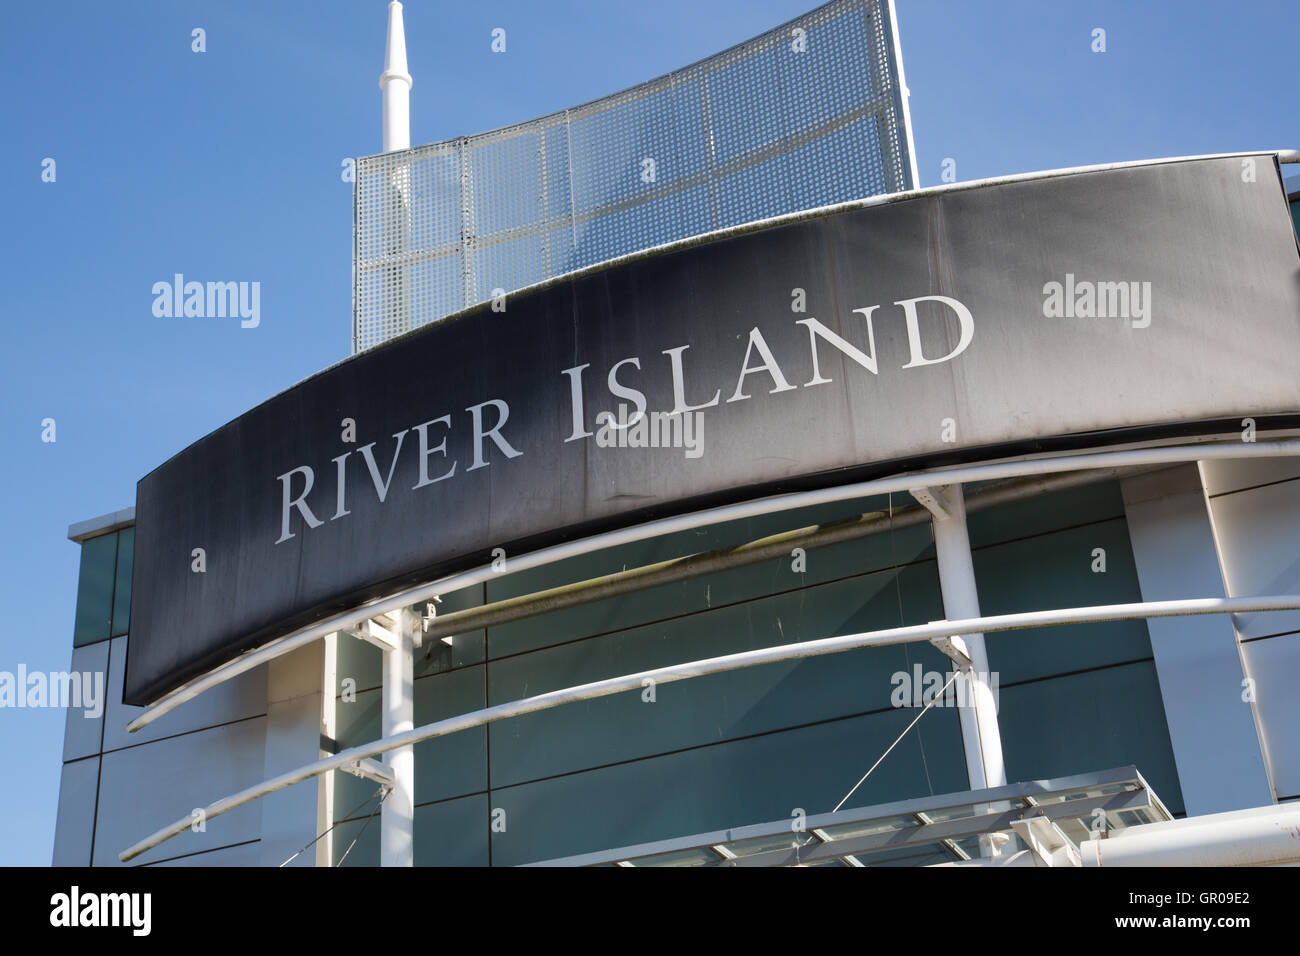 River Island signage Foto de stock